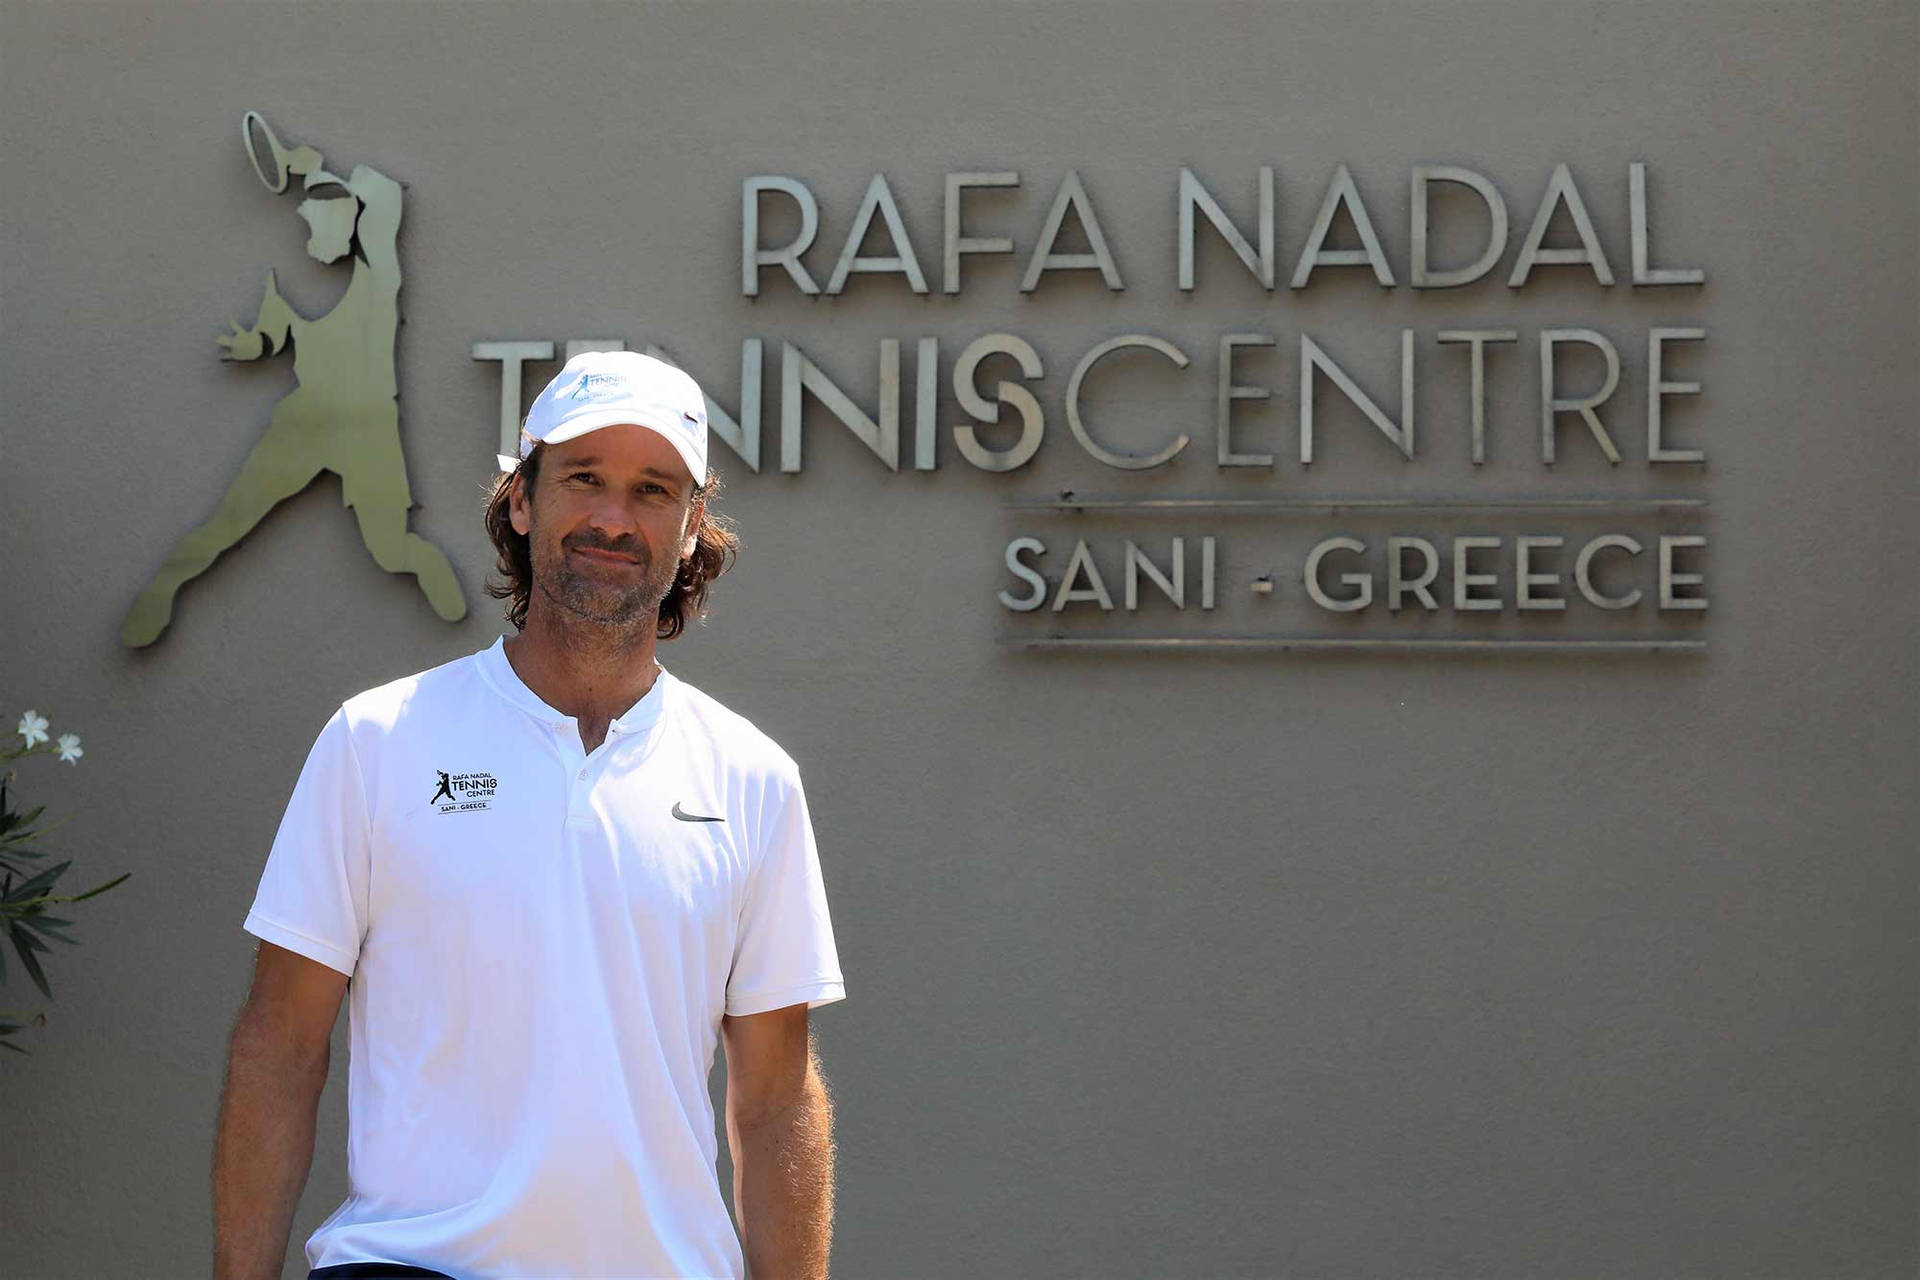 Carlosmoya Rafa Nadal Tennis-zentrum Wallpaper